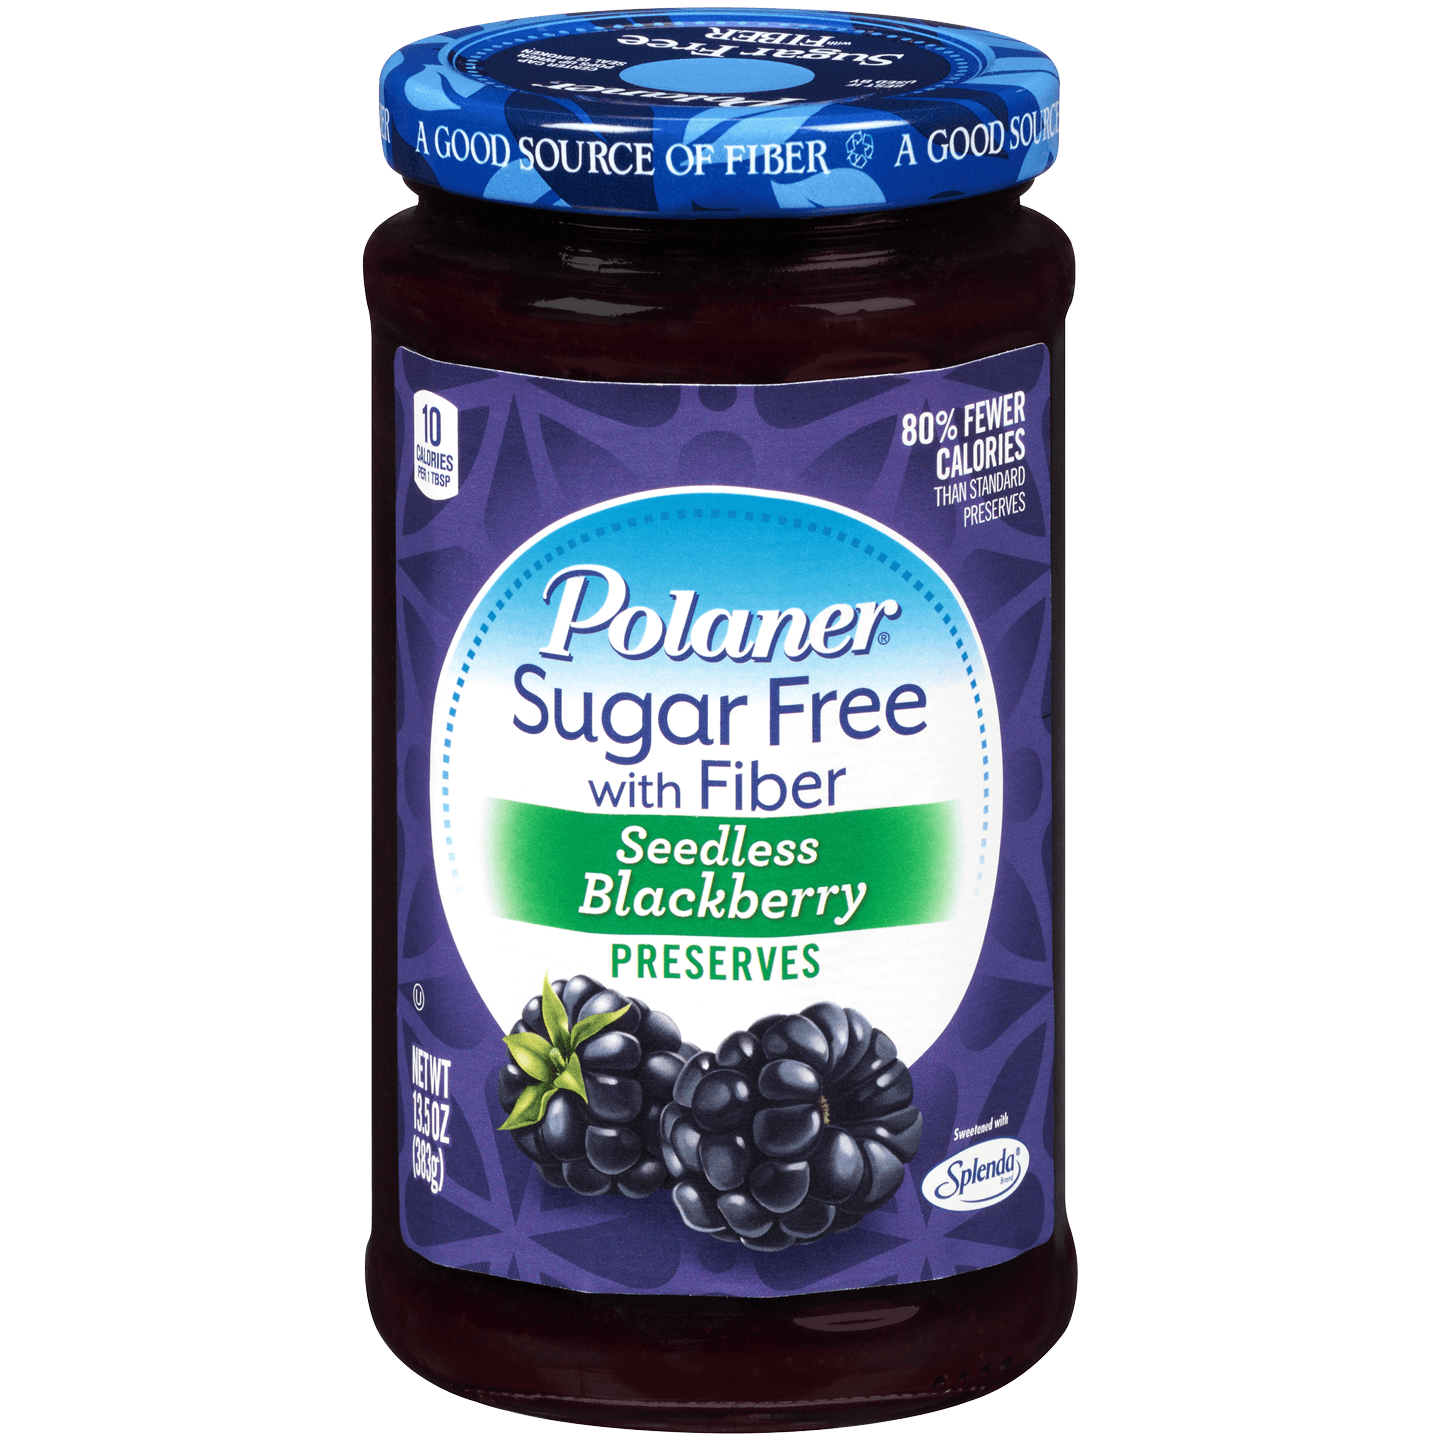 Polaner Sugar Free with Fiber Blackberry Preserves